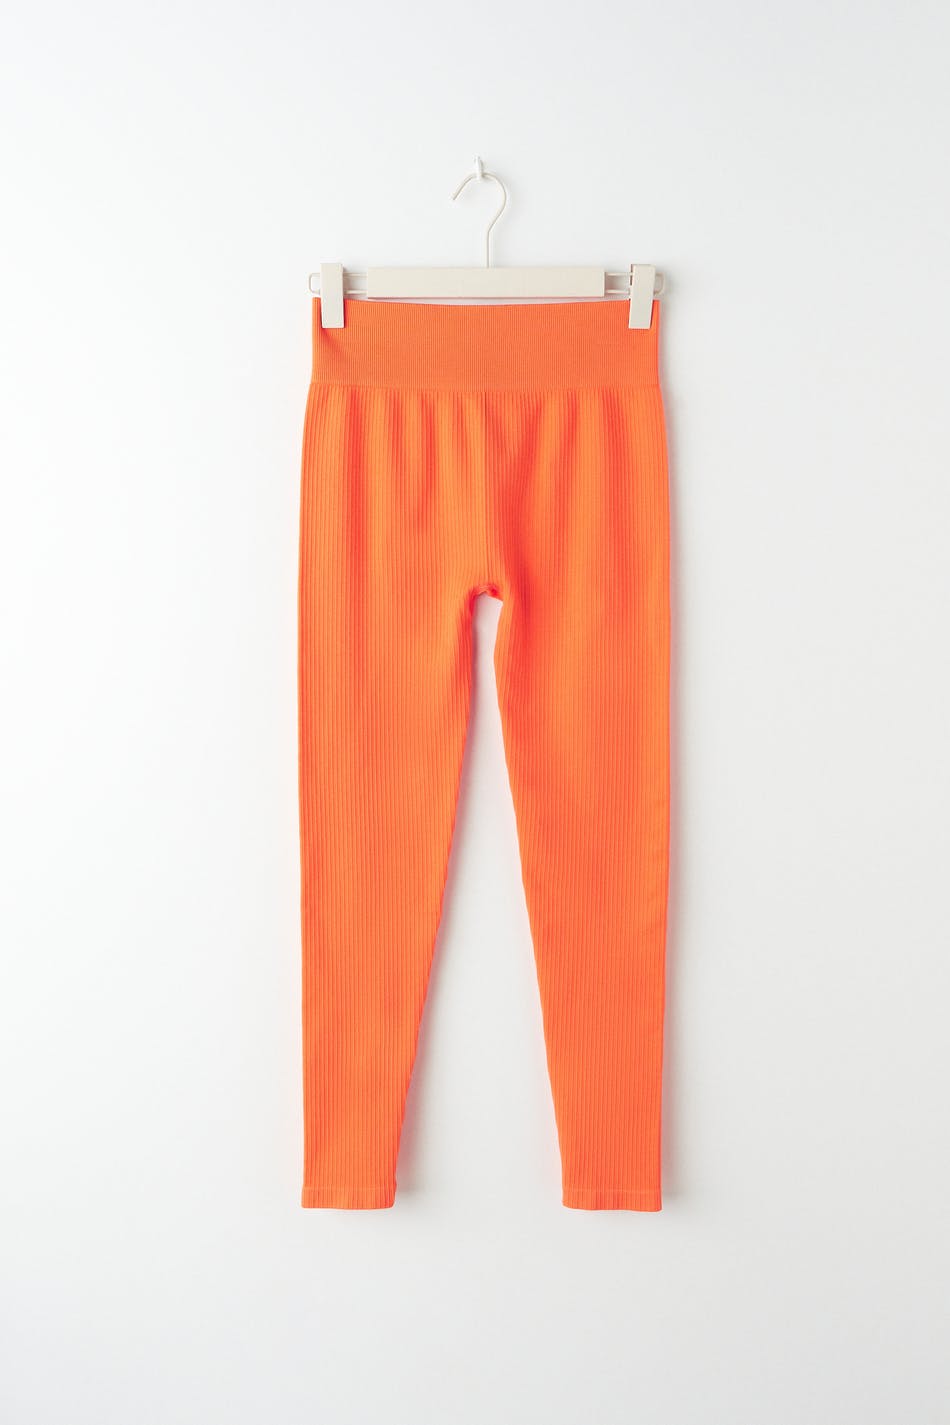 Gymboree 100% Cotton Polka Dots Orange Leggings Size 3T - 61% off